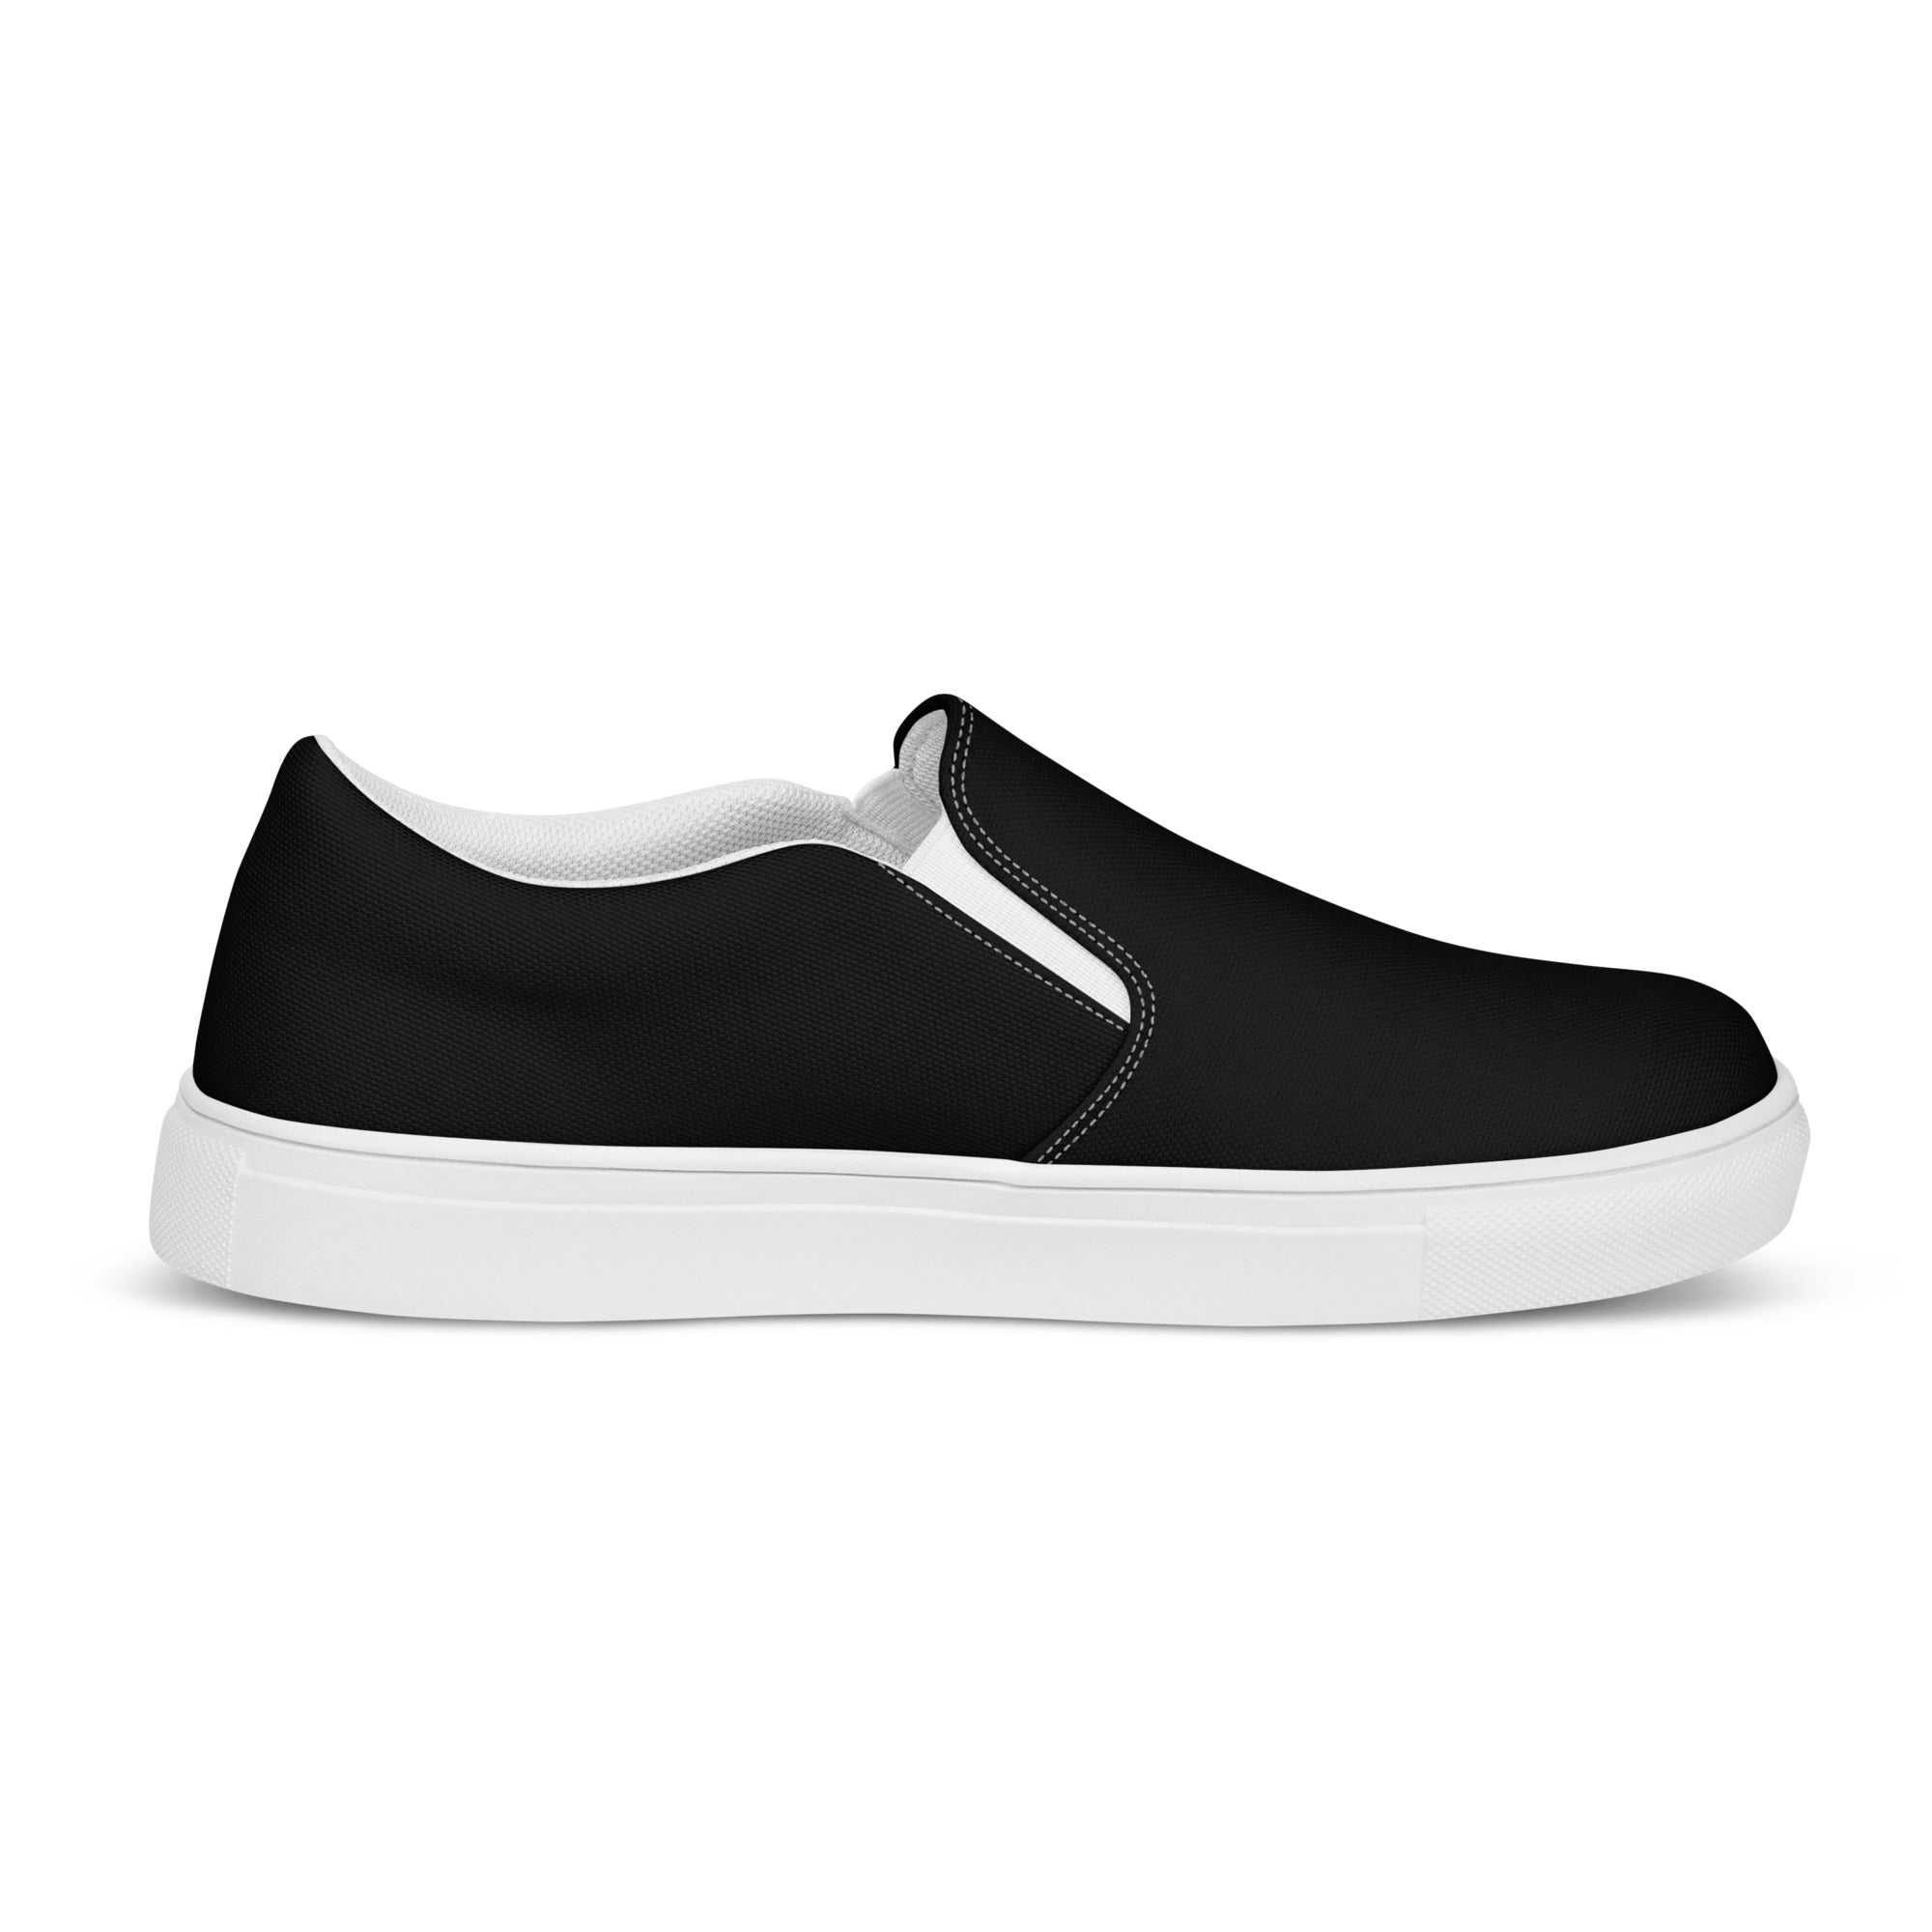 Black Slip On Canvas Shoes